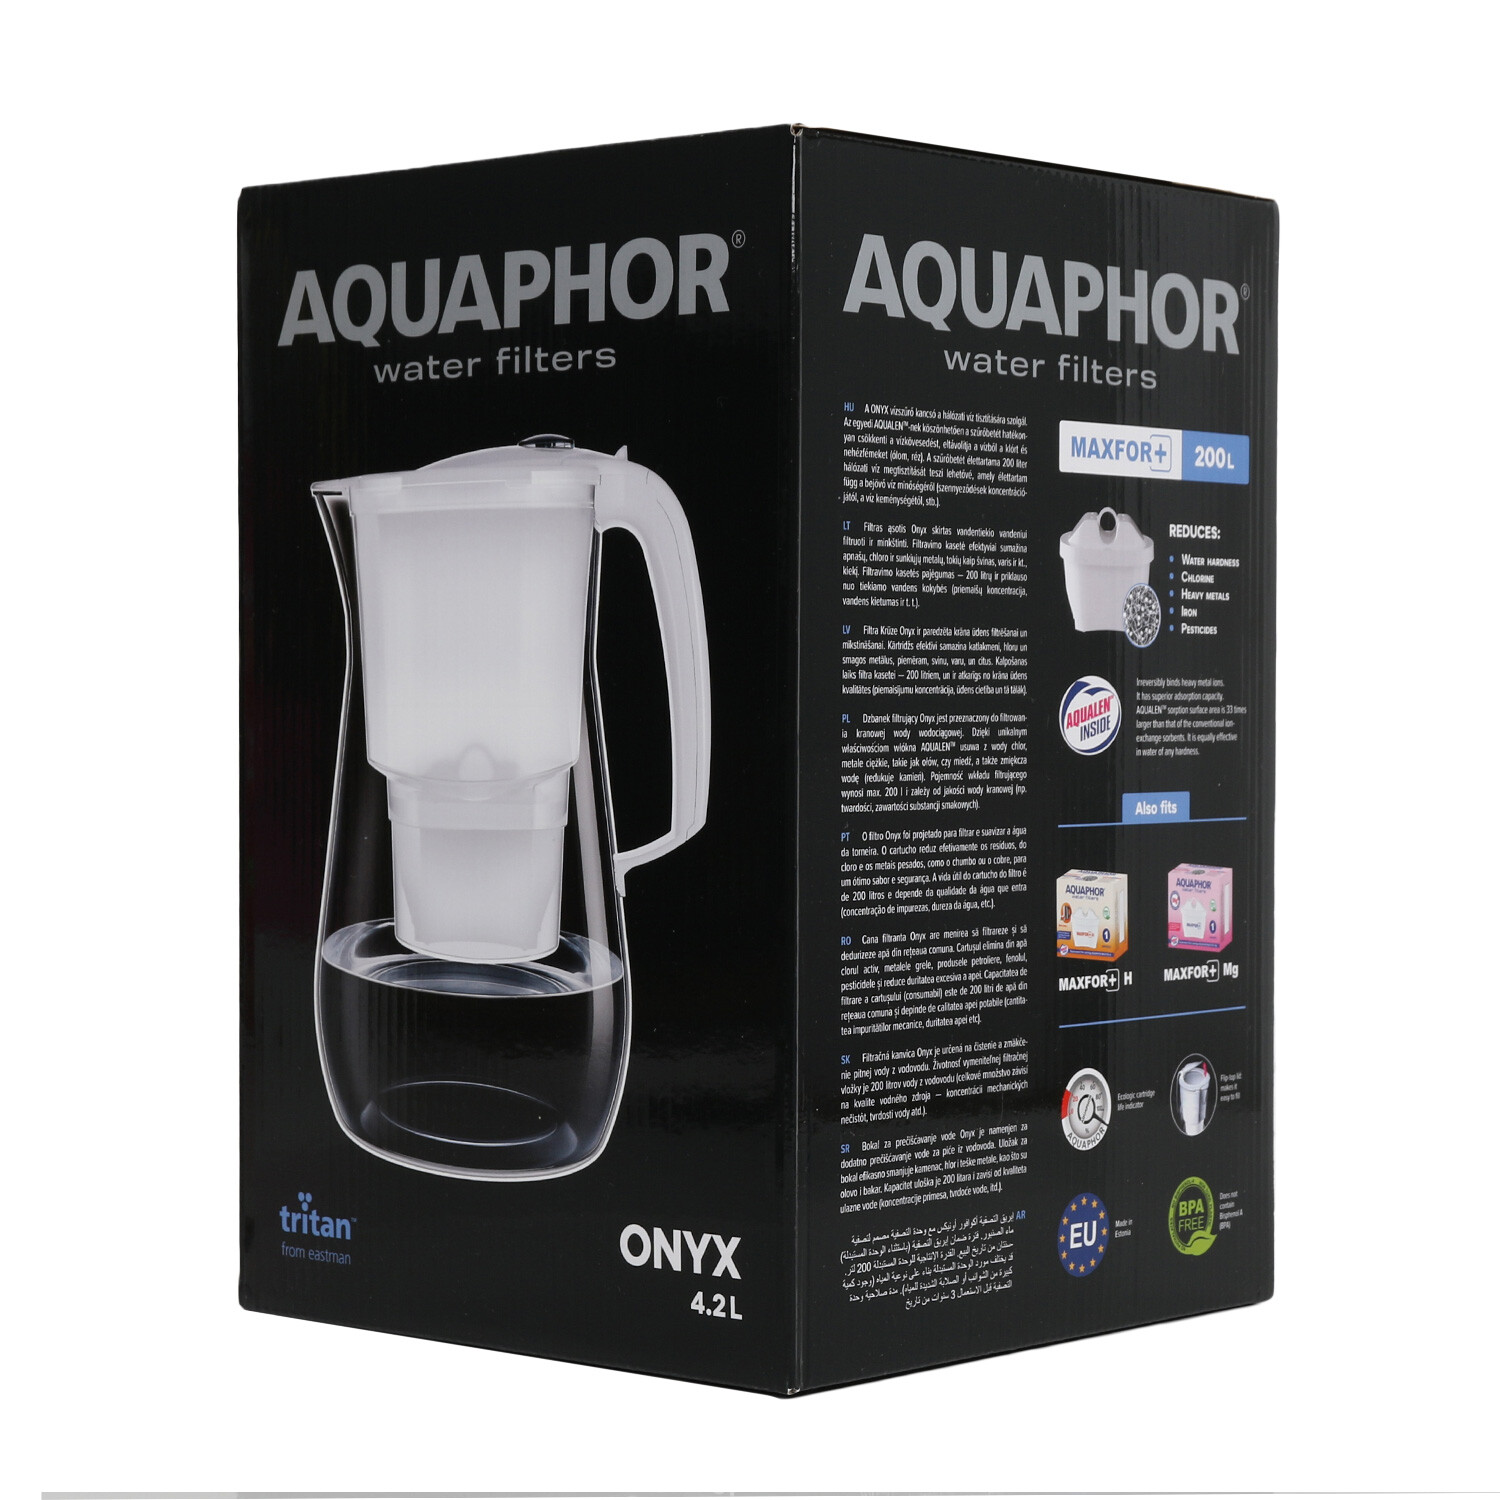 Aquaphor Onyx Water 4.2L Filter Jug Image 2